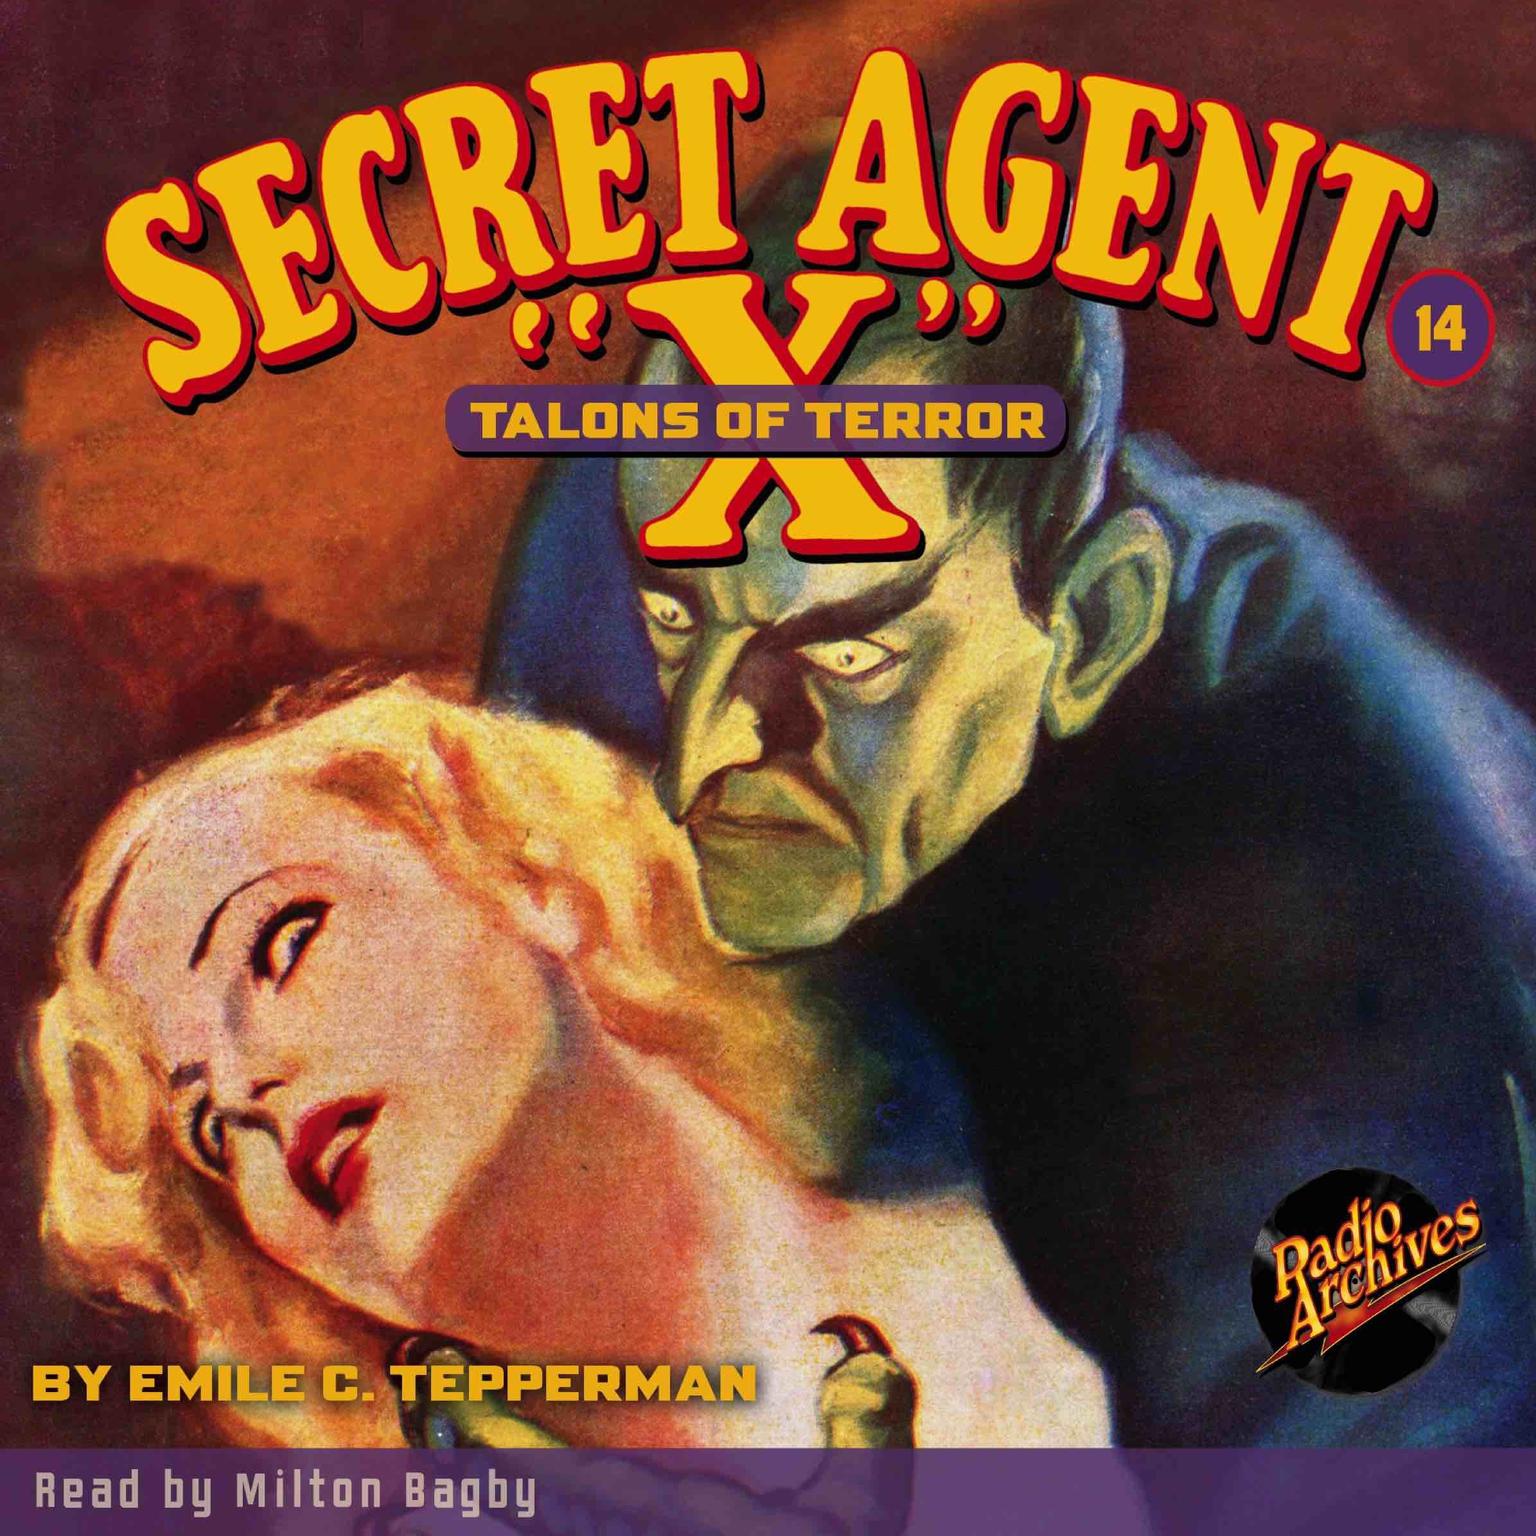 Secret Agent X: Talons of Terror Audiobook, by Emile C. Tepperman